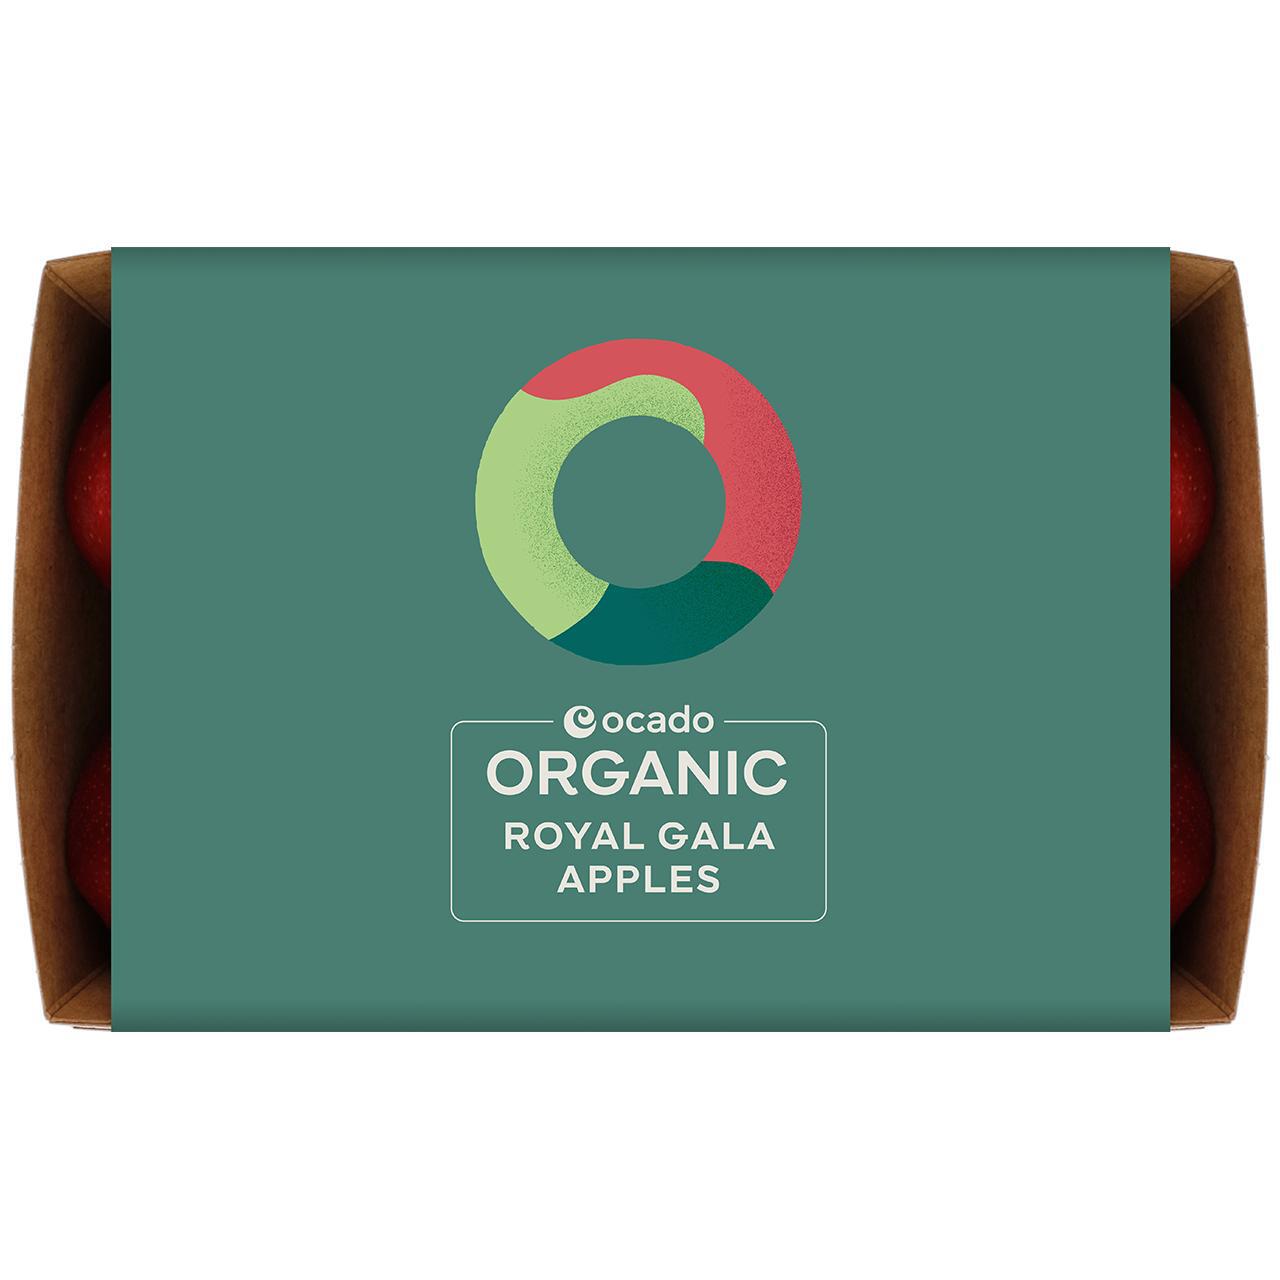 Ocado Organic Royal Gala Apples min 6 per pack